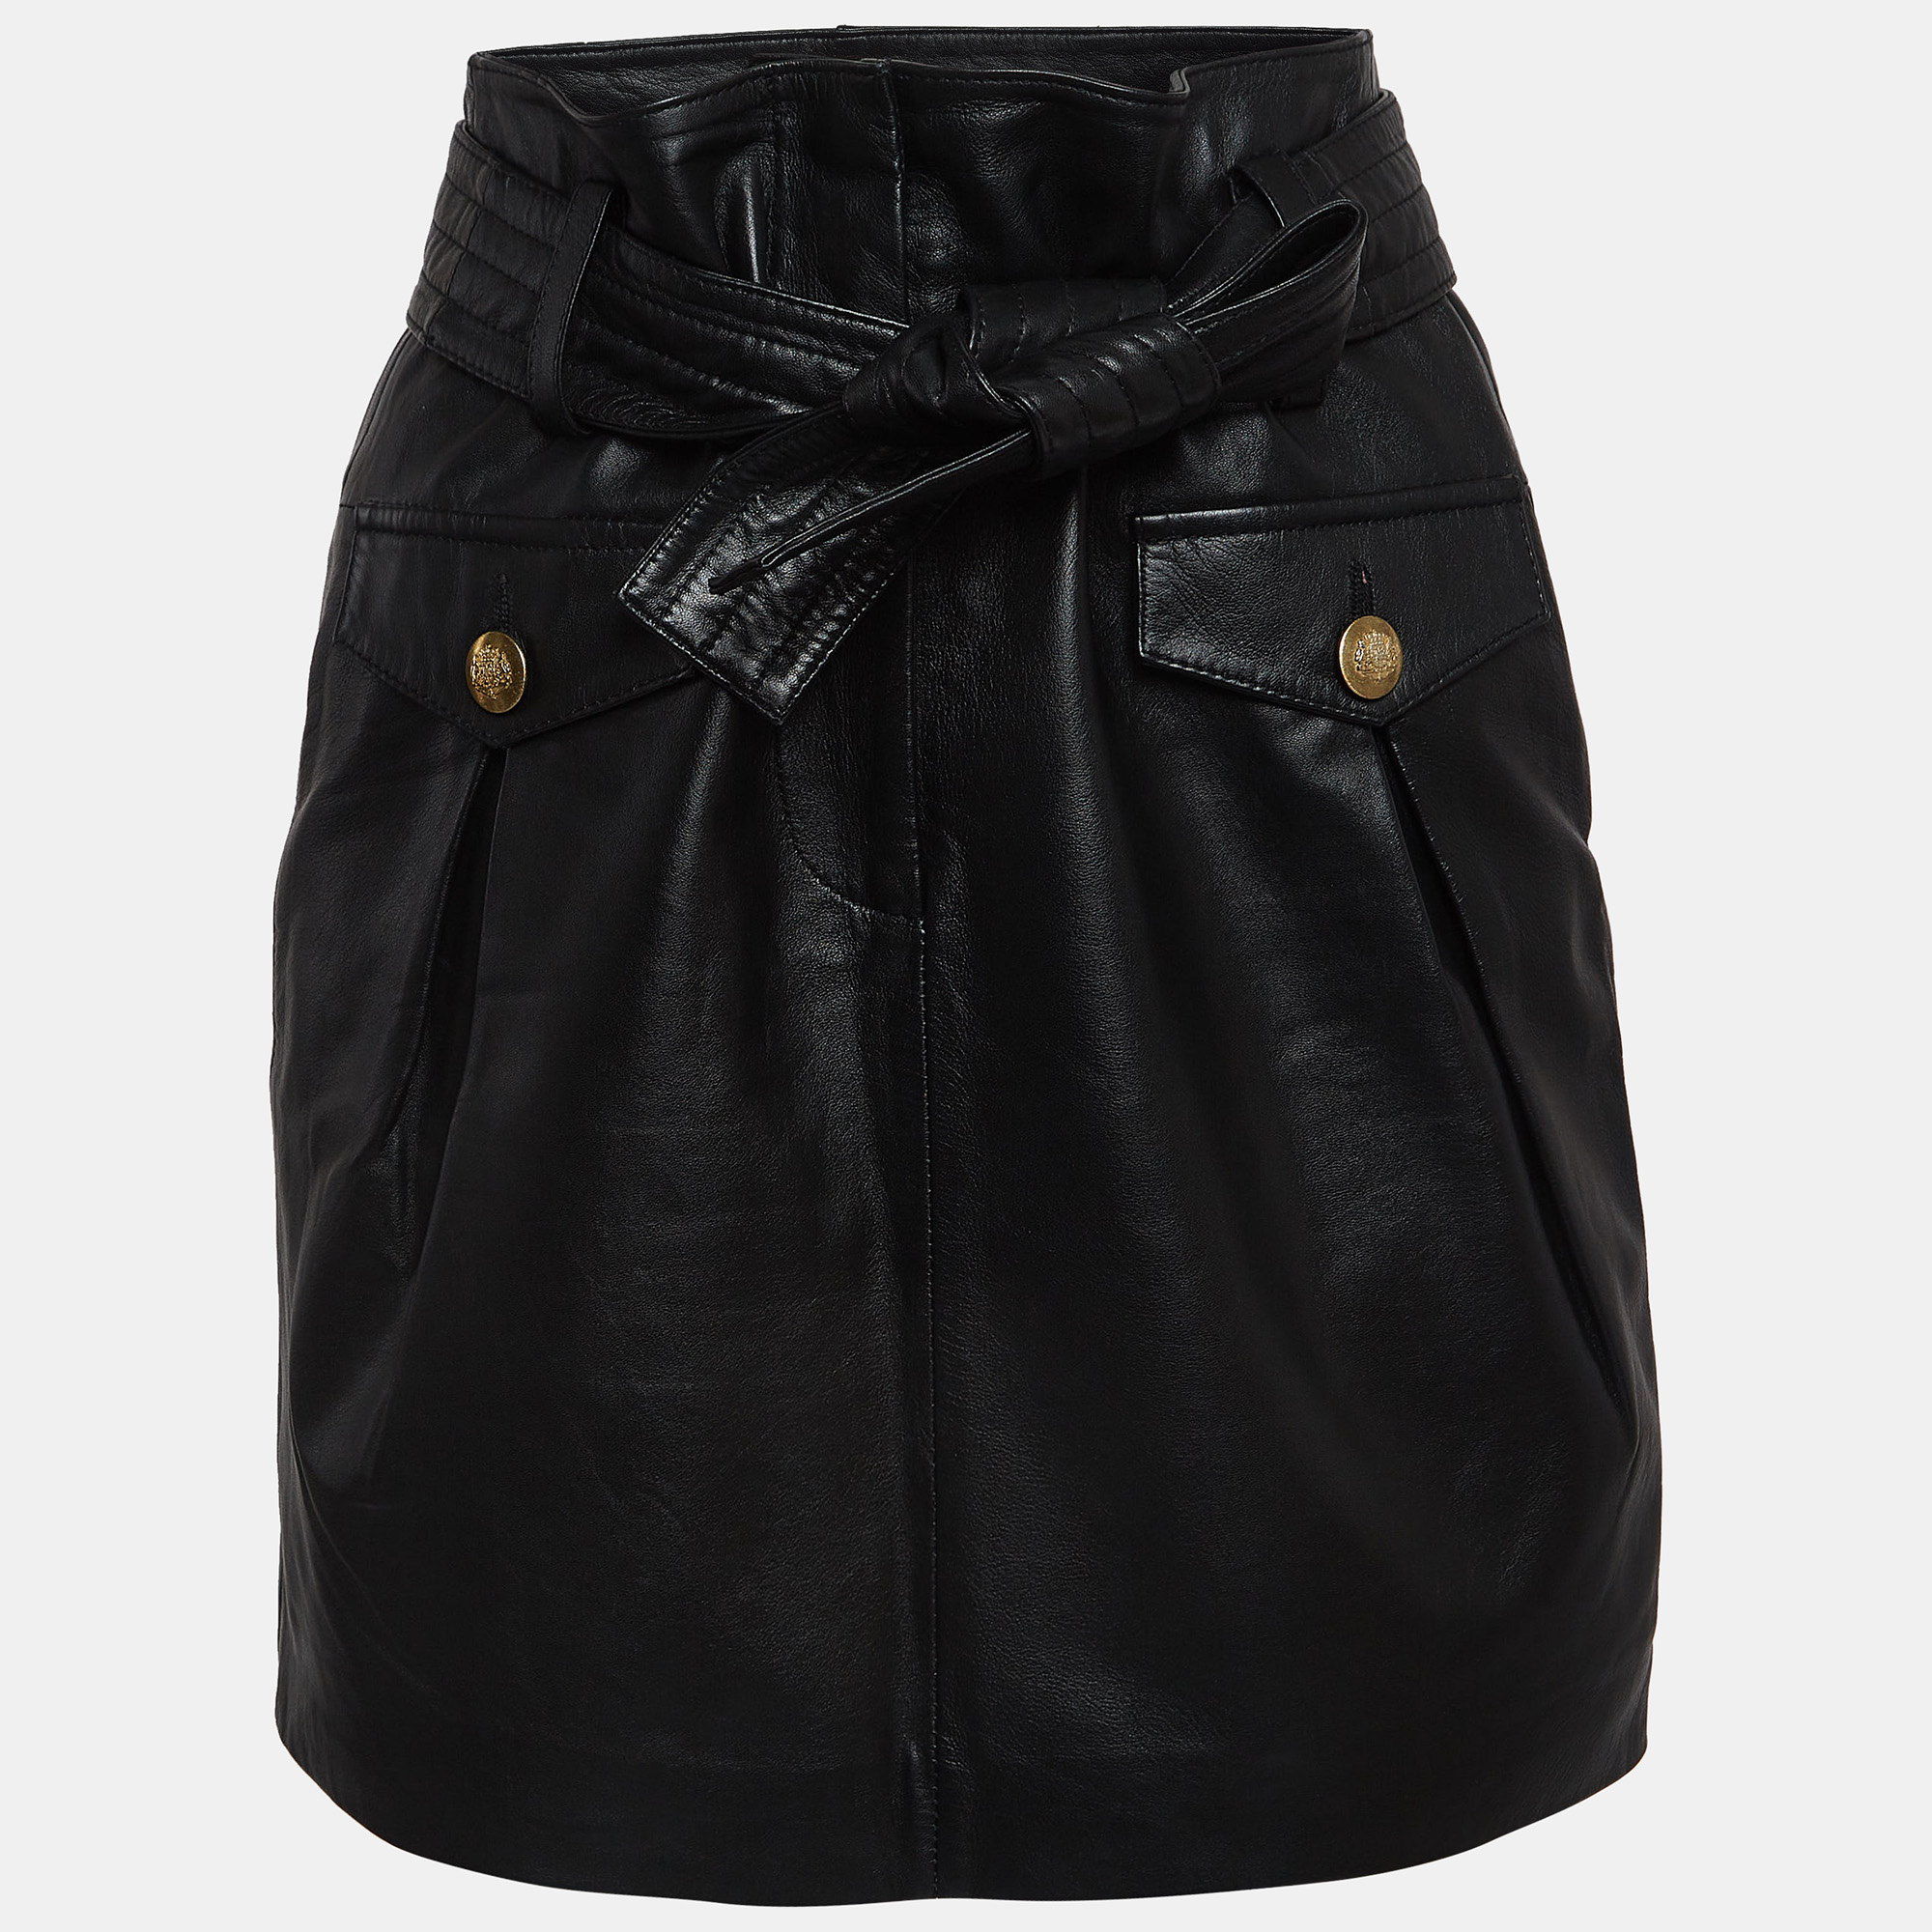 Maje black leather belted mini skirt s